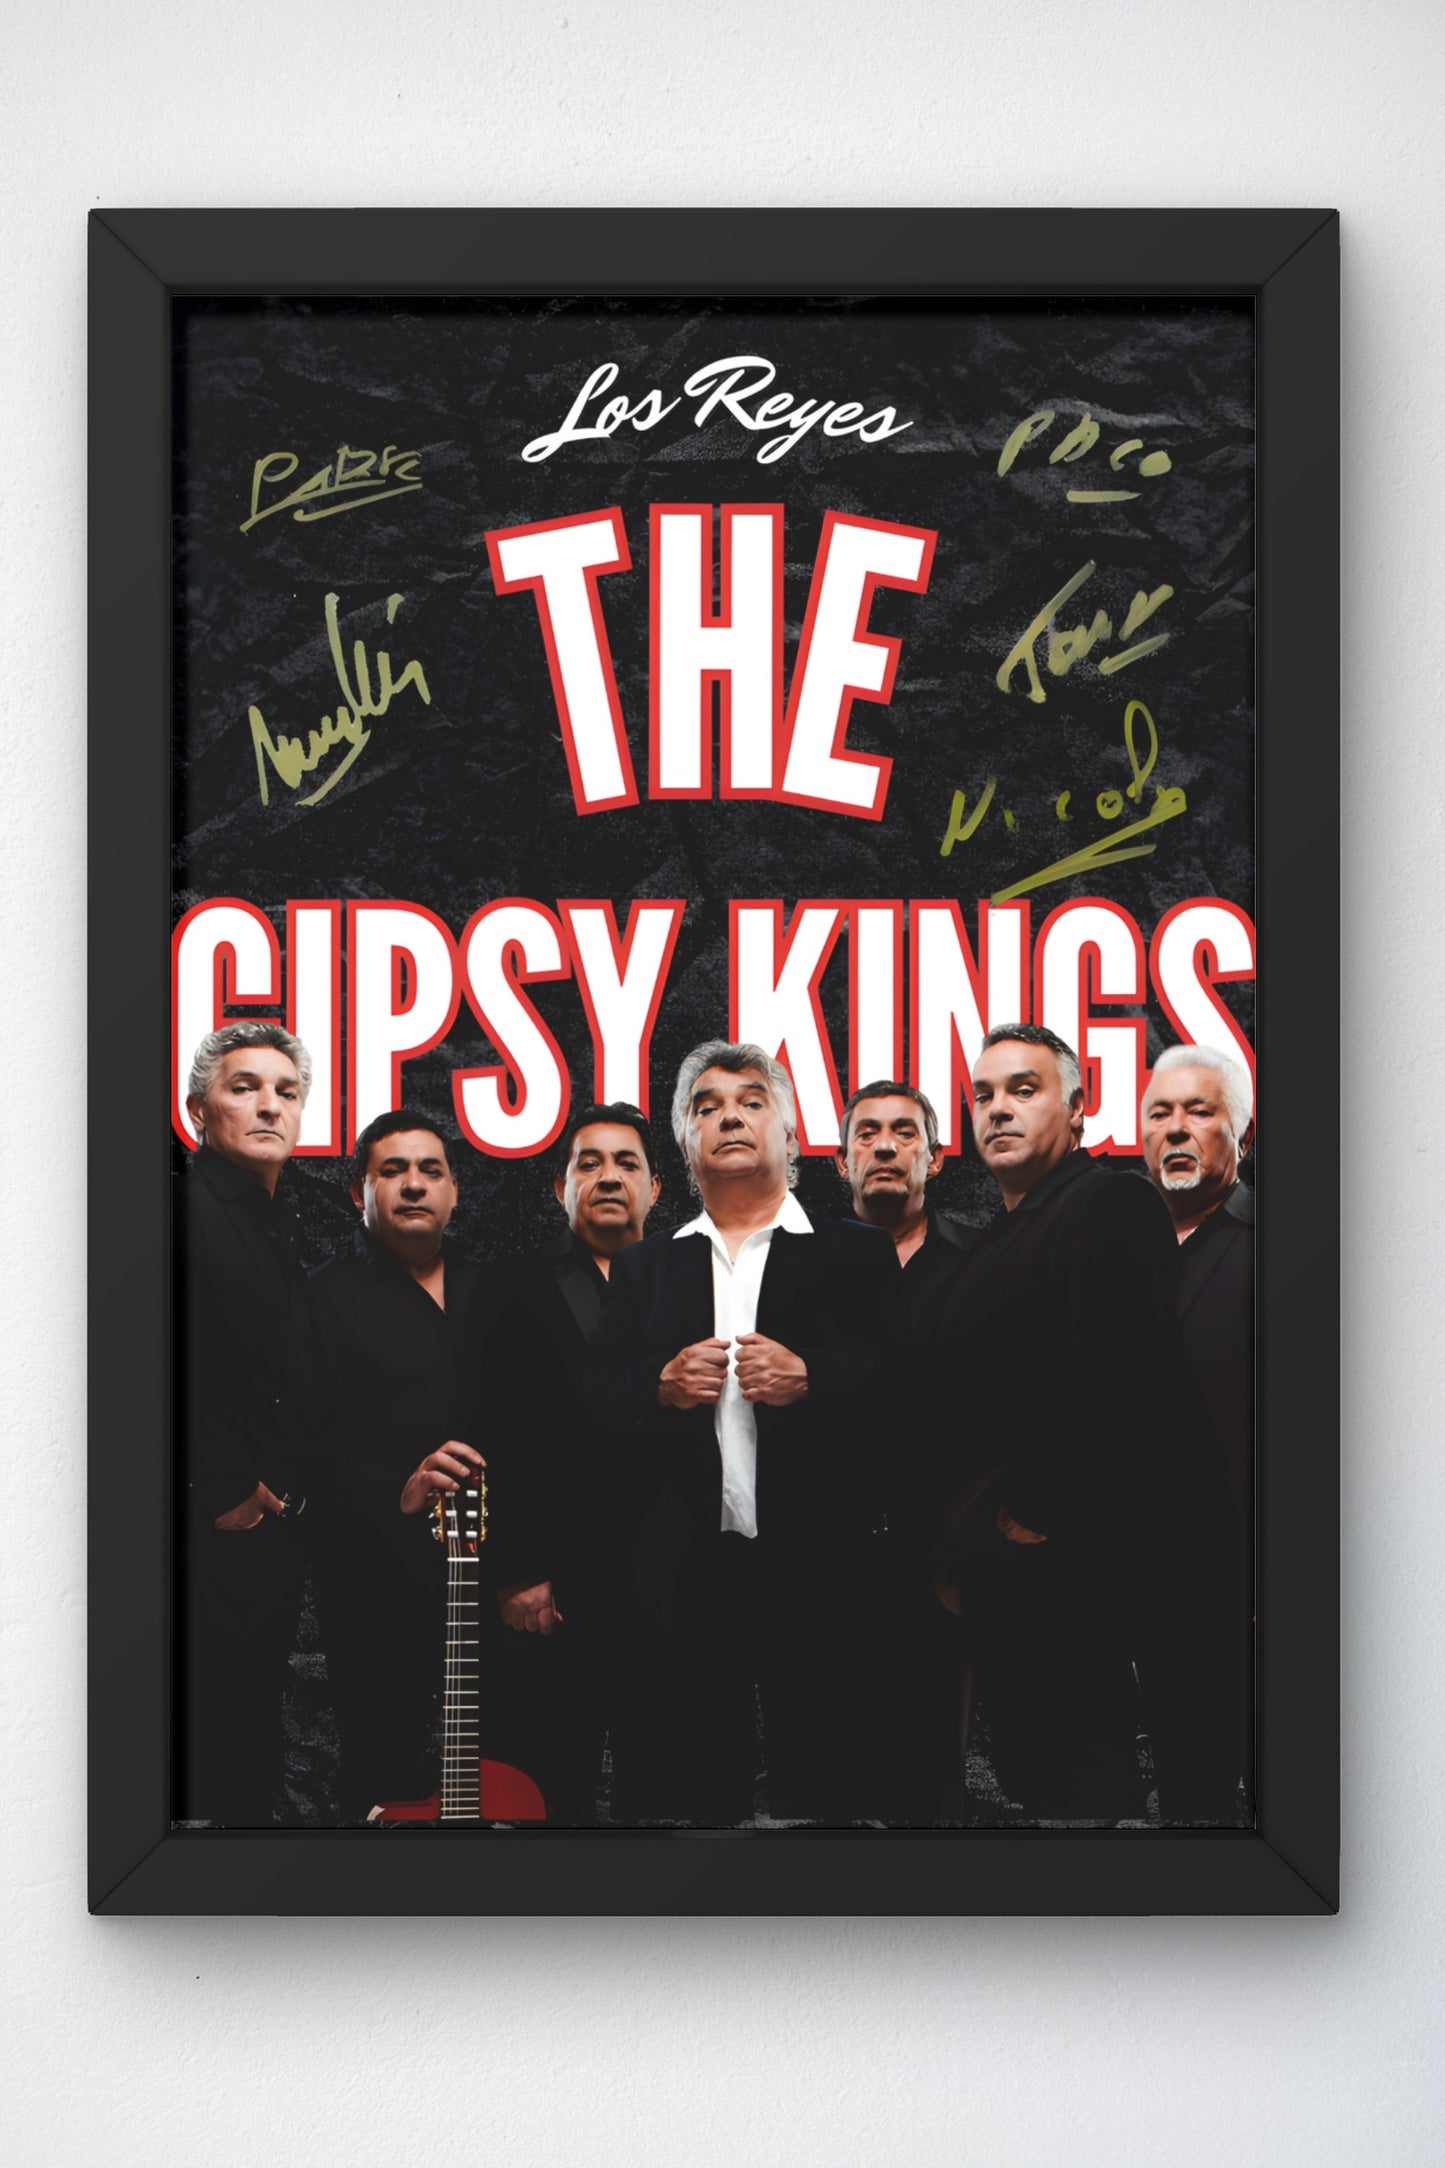 Poster The Gipsy Kings